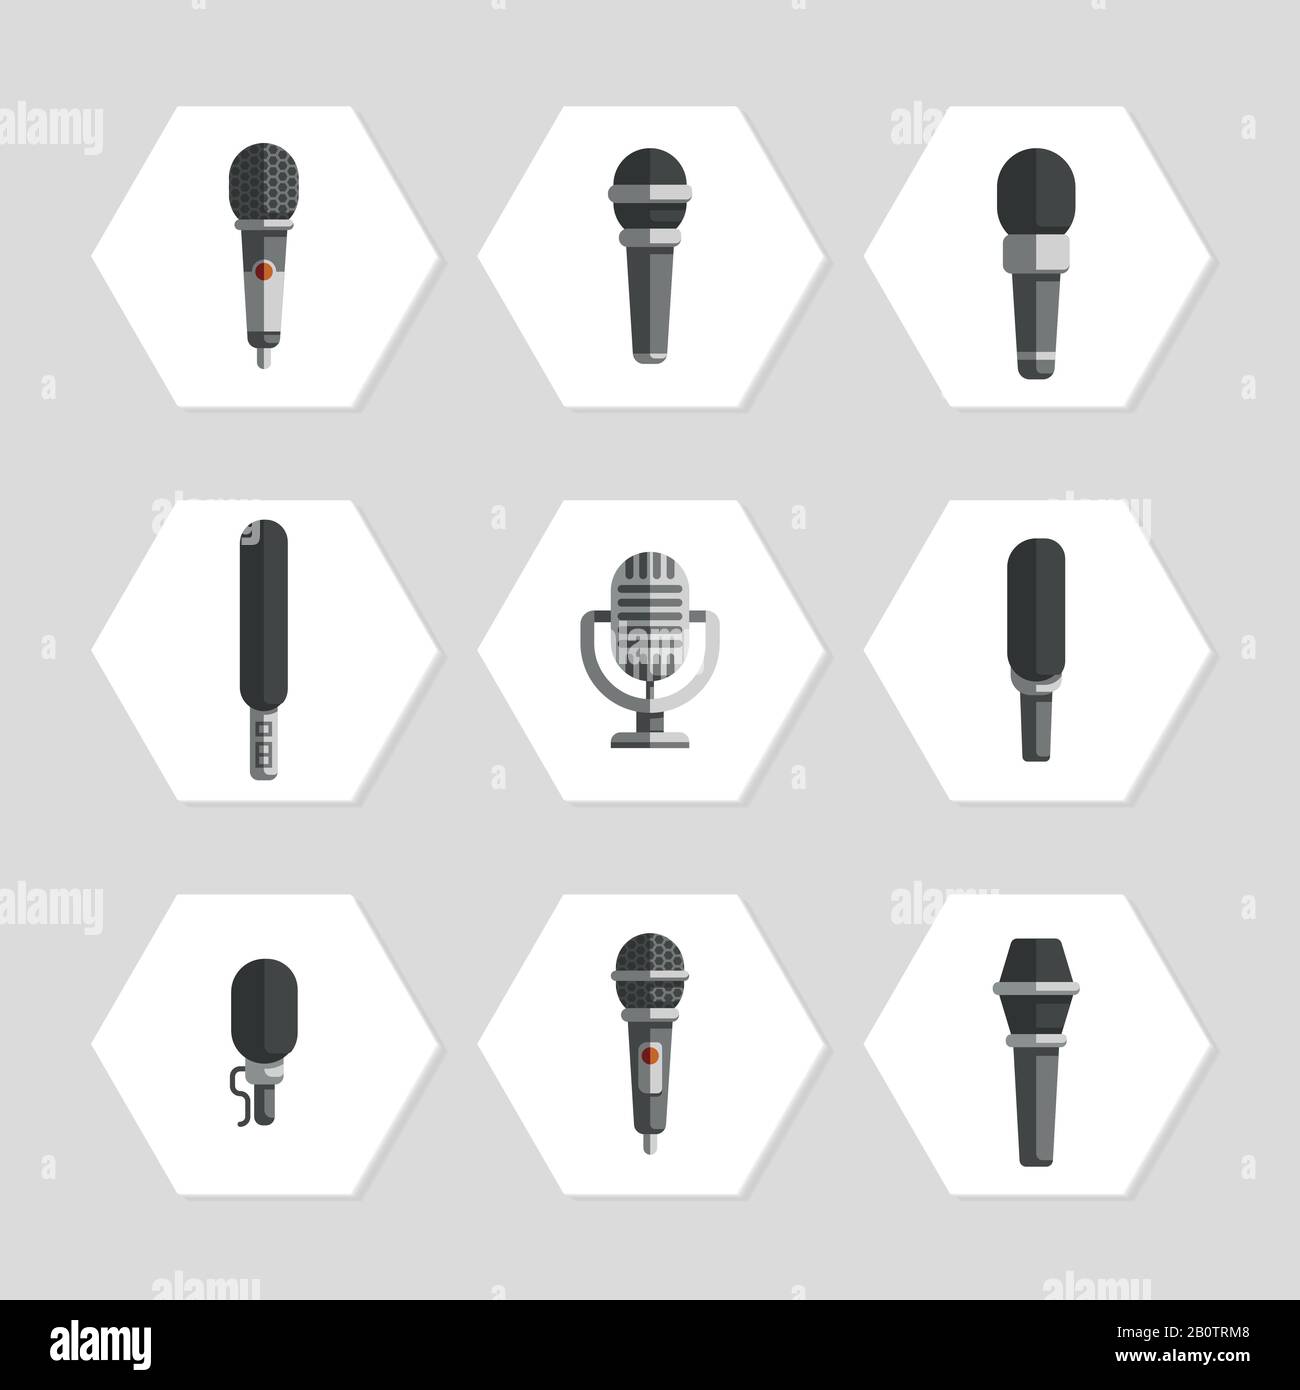 Mikrofon-Symbole - Symbole für flache Mikrofone festgelegt. Kollektion mit Vintage-Retro-Mikrofon. Vektorgrafiken Stock Vektor